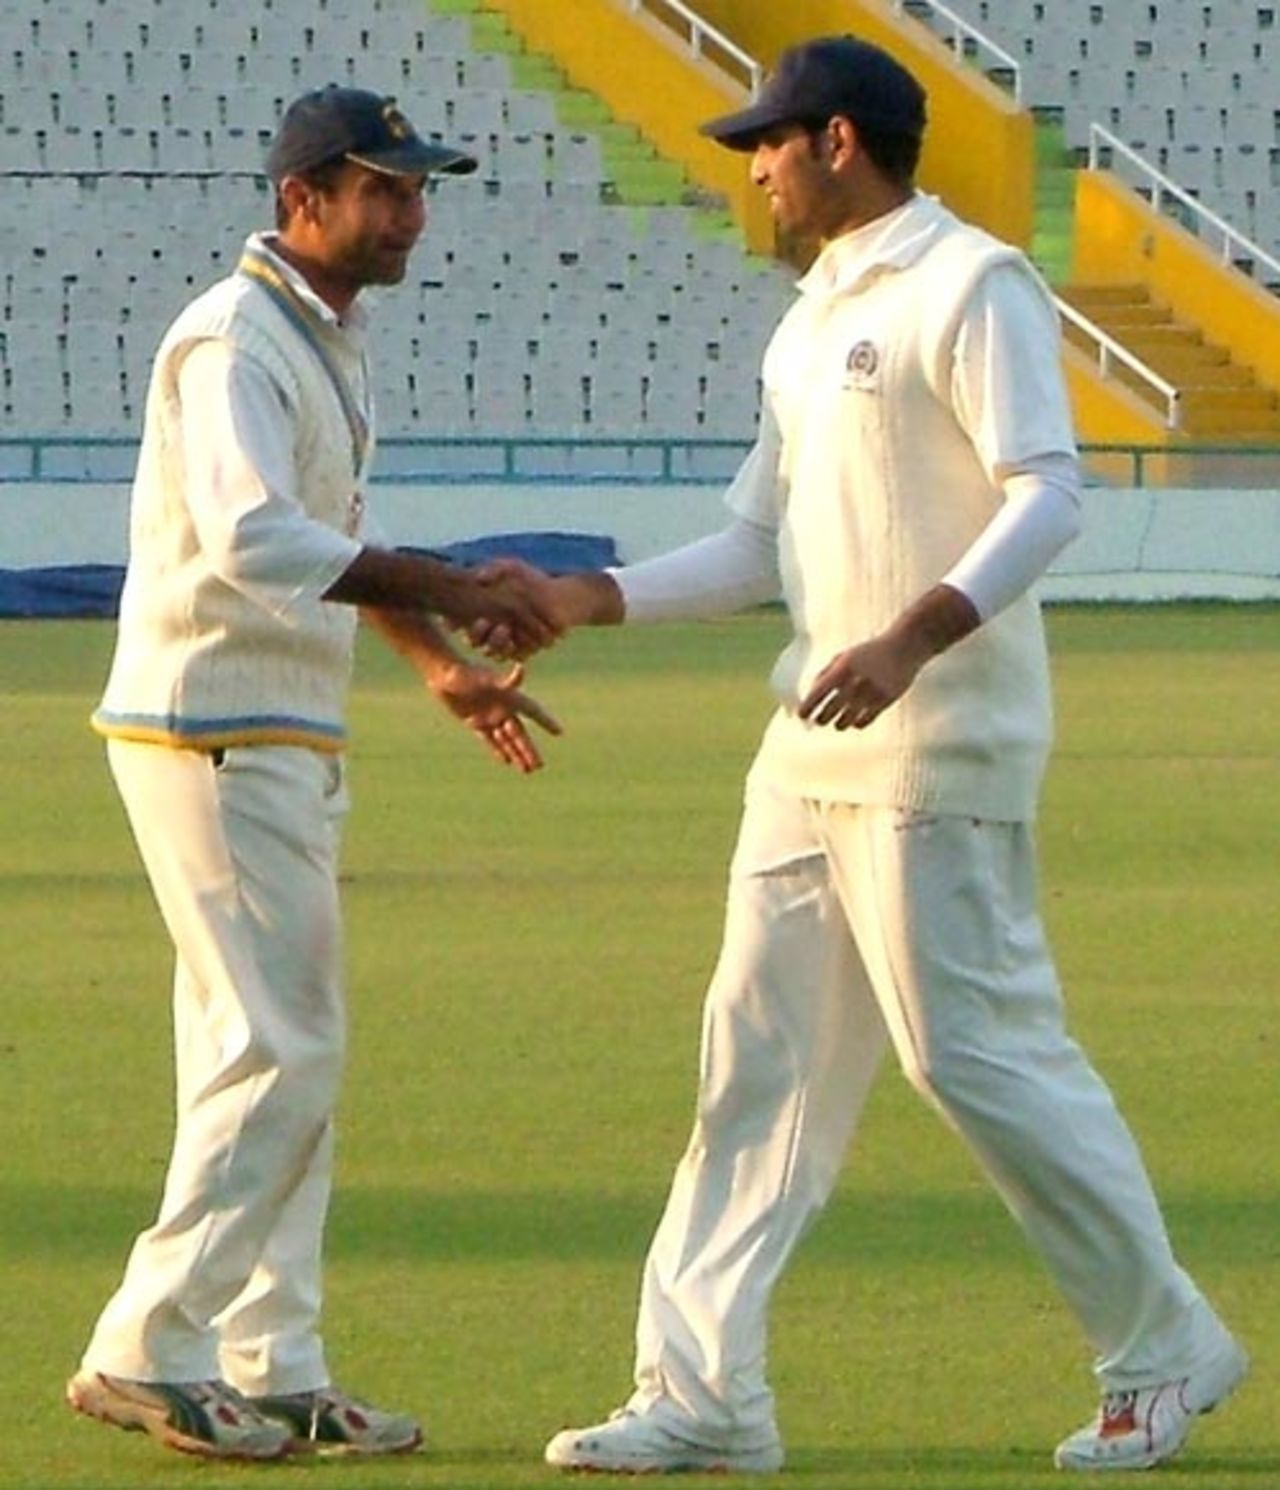 Pankaj Dharmani and VVS Laxman, the Punjab and Hyderabad captains, shake hands after the match, Punjab v Hyderabad, Ranji Trophy Super League, 2nd round, Mohali, 4th day, November 18, 2007